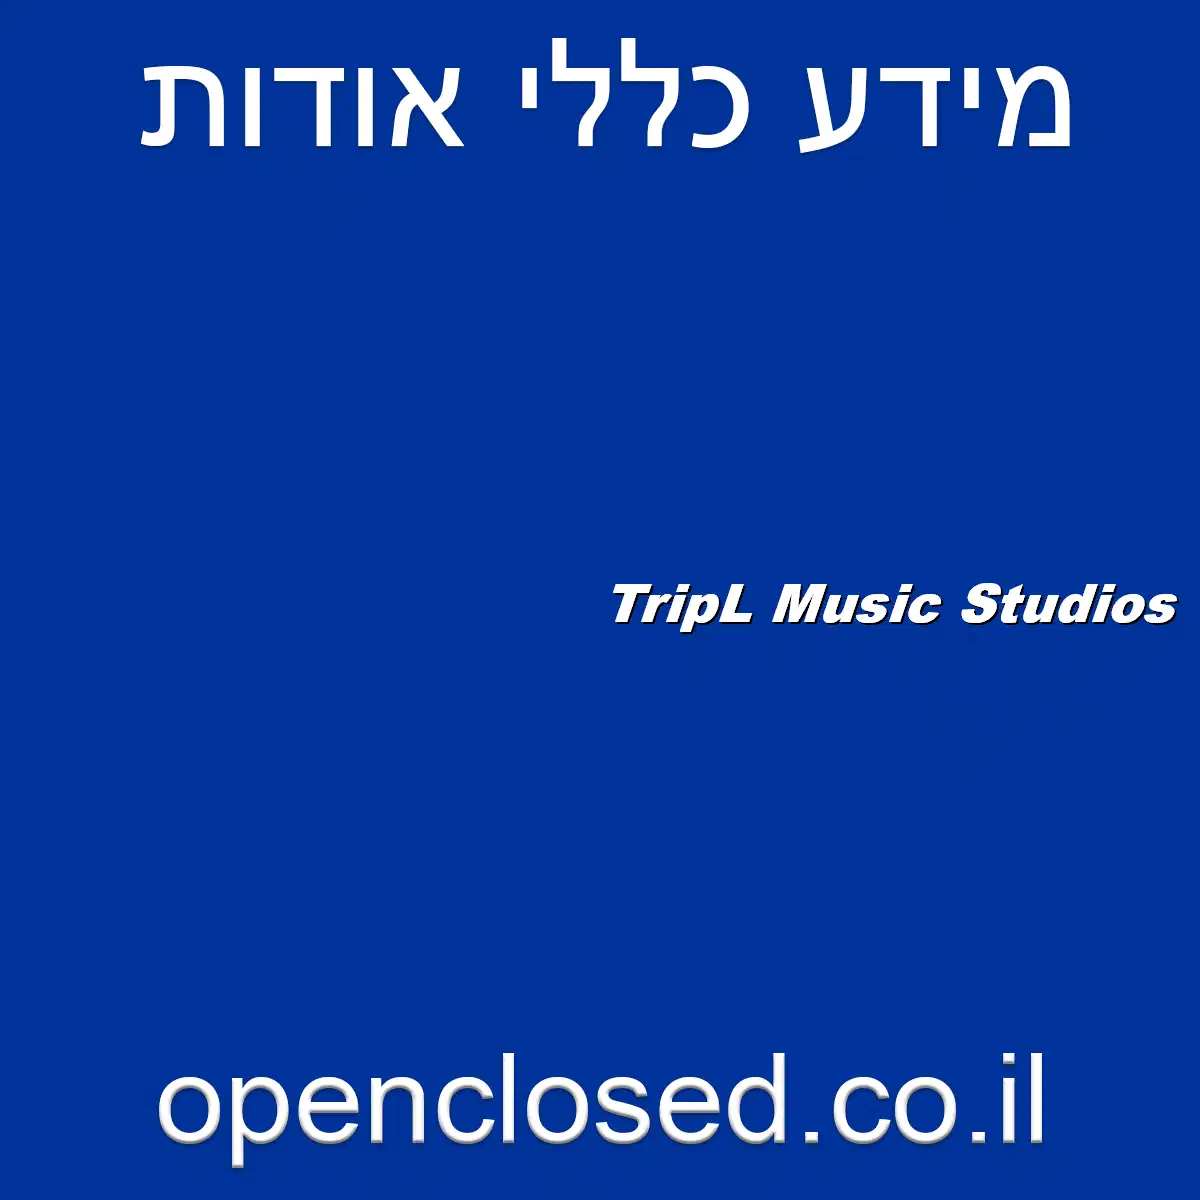 TripL Music Studios